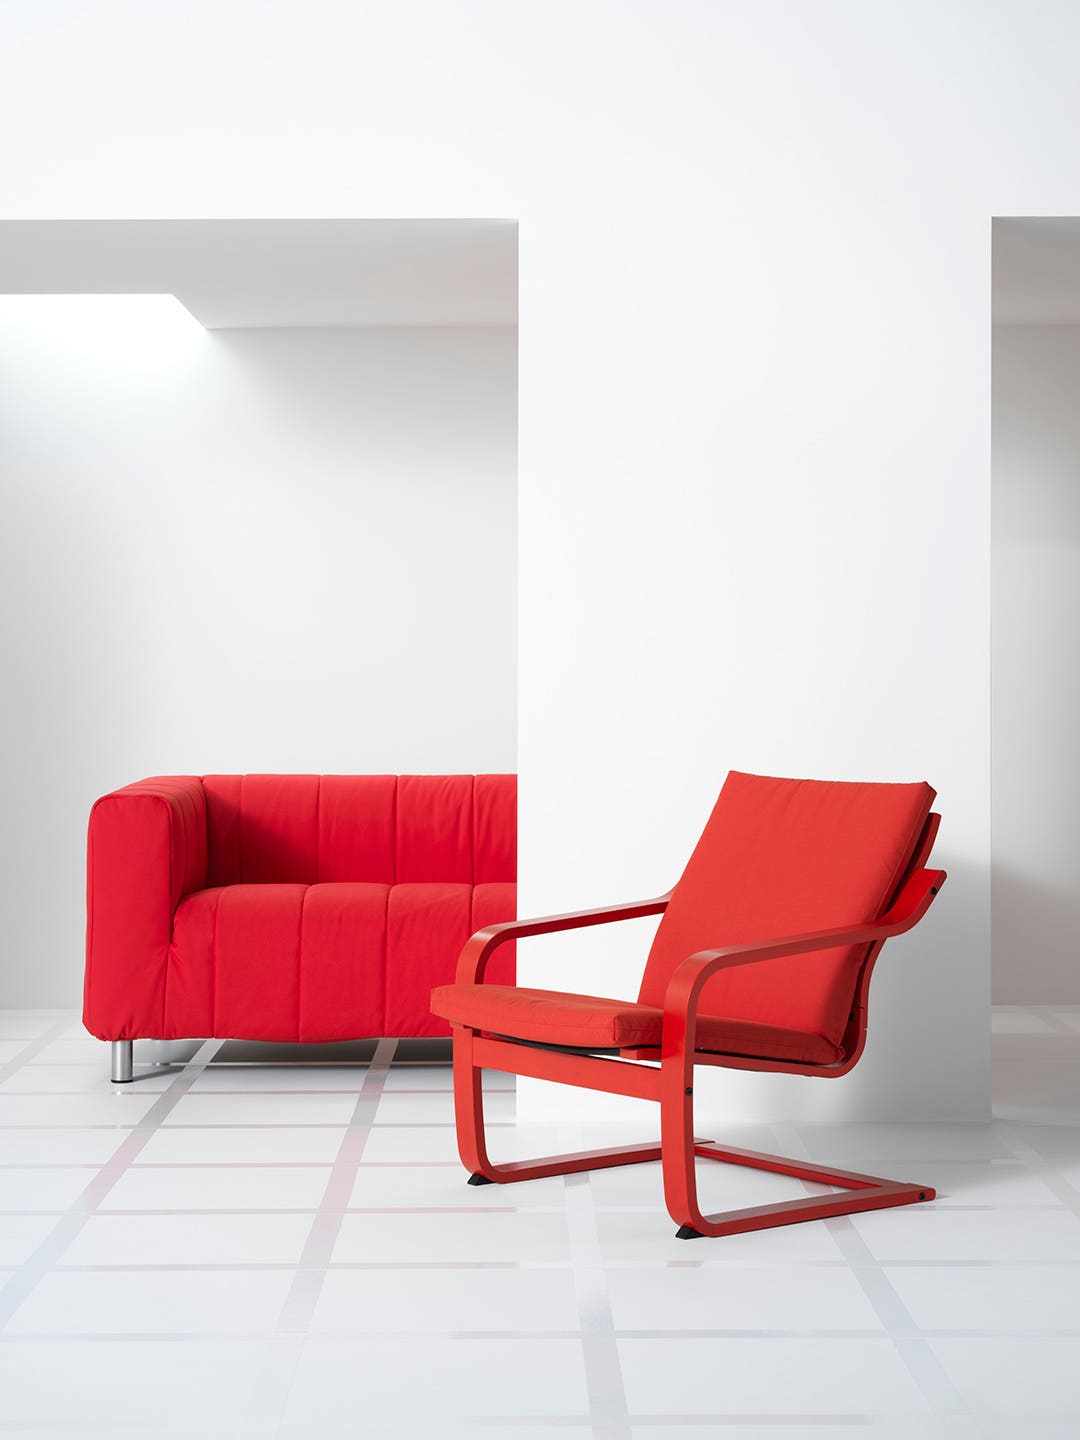 IKEA Klippan sofa and Poang chair in red